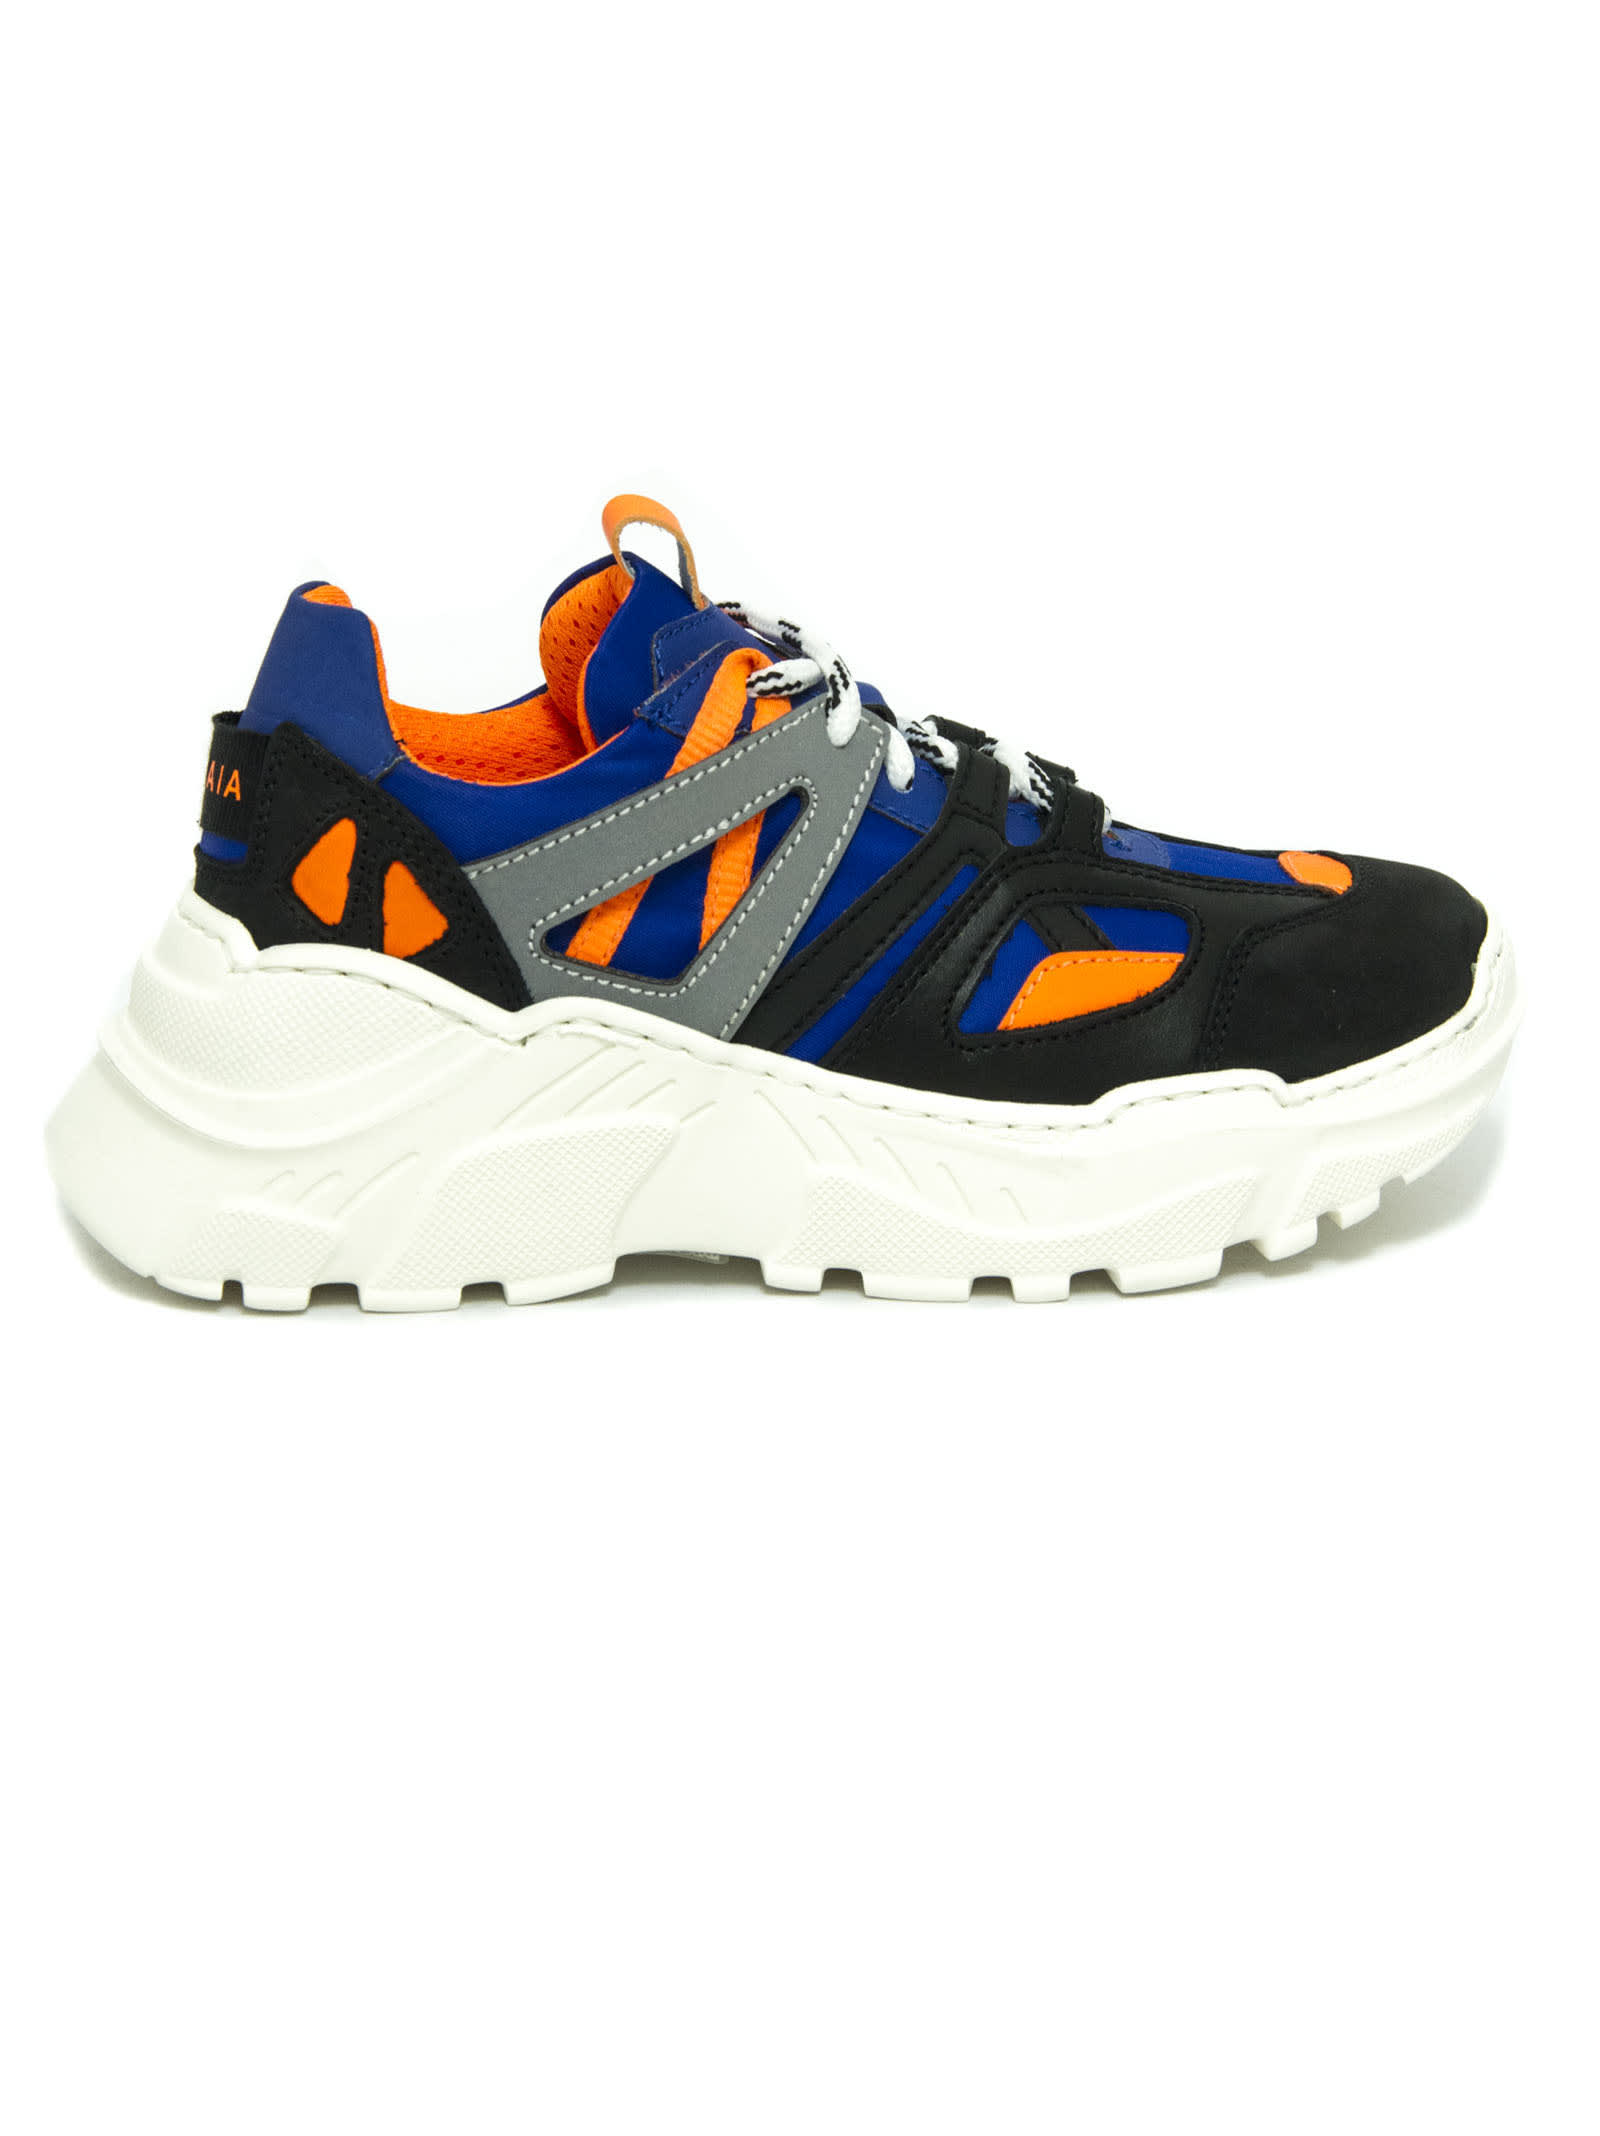 Cinzia Araia Black, Orange And Blue Fabric Sneakers